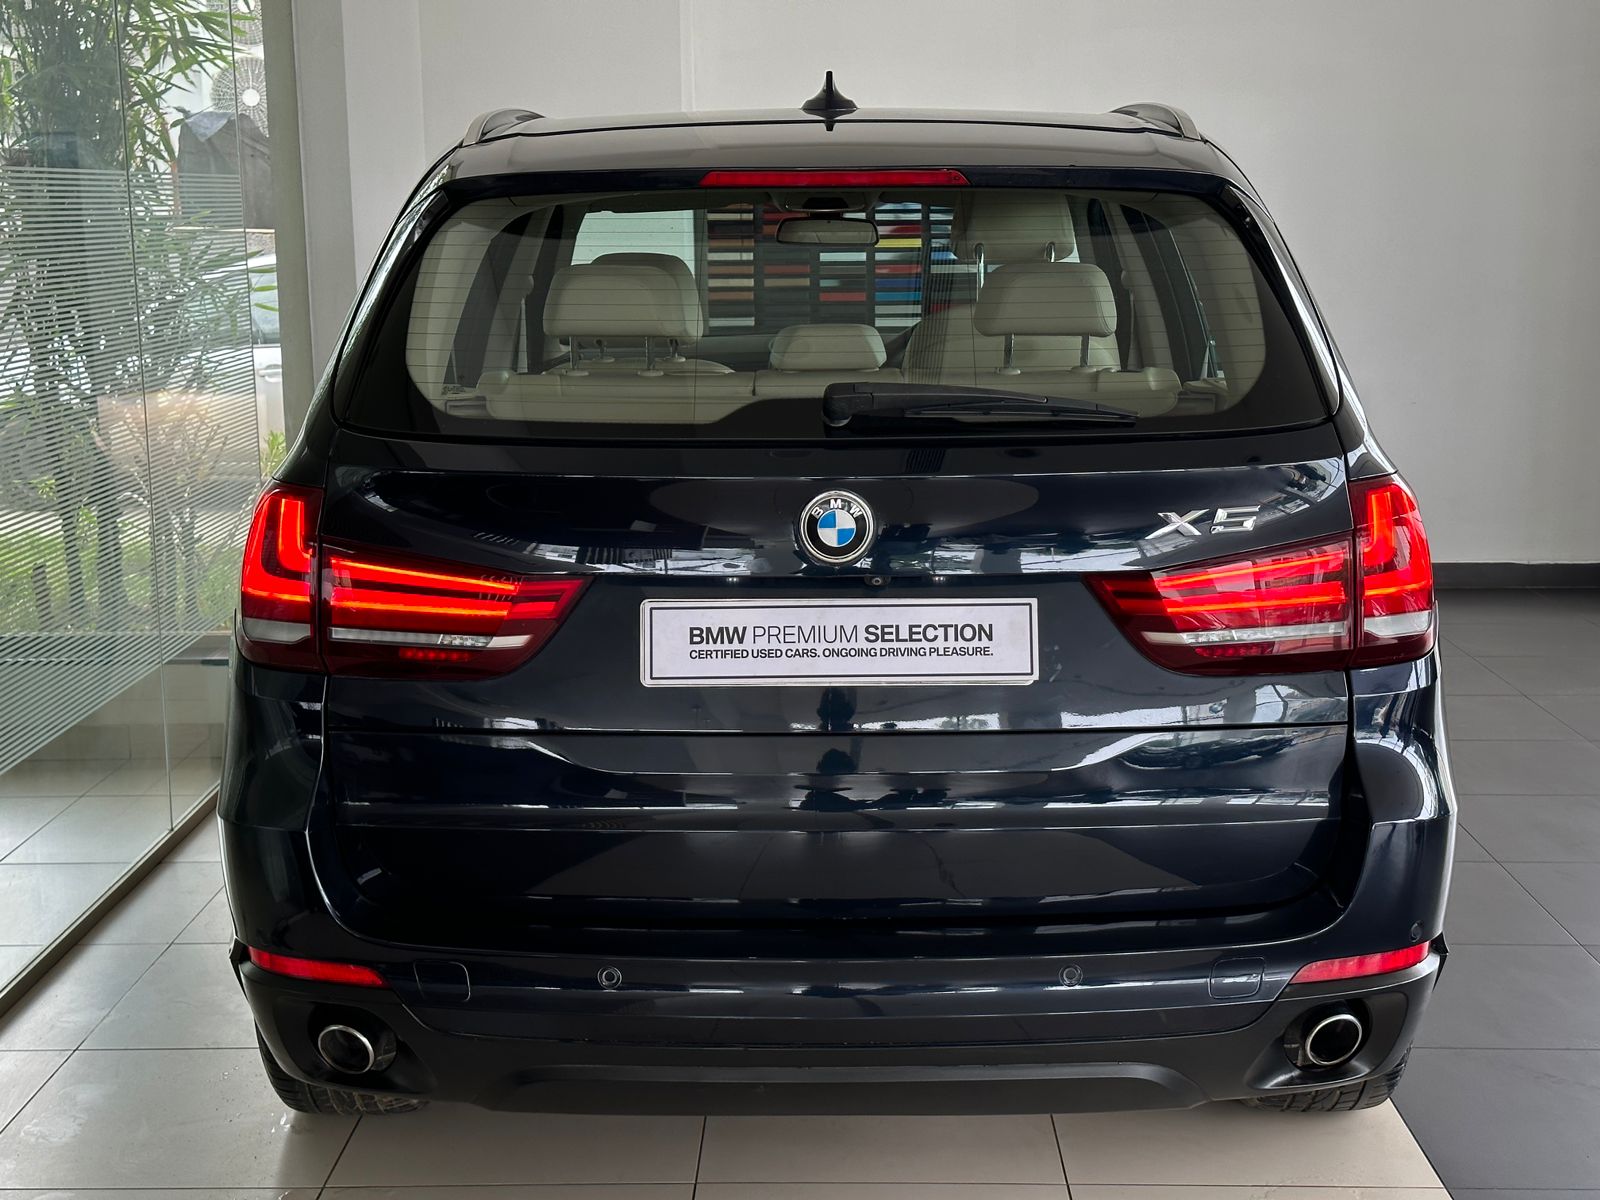 BMW X5 - 2015 model - 91439 kms back